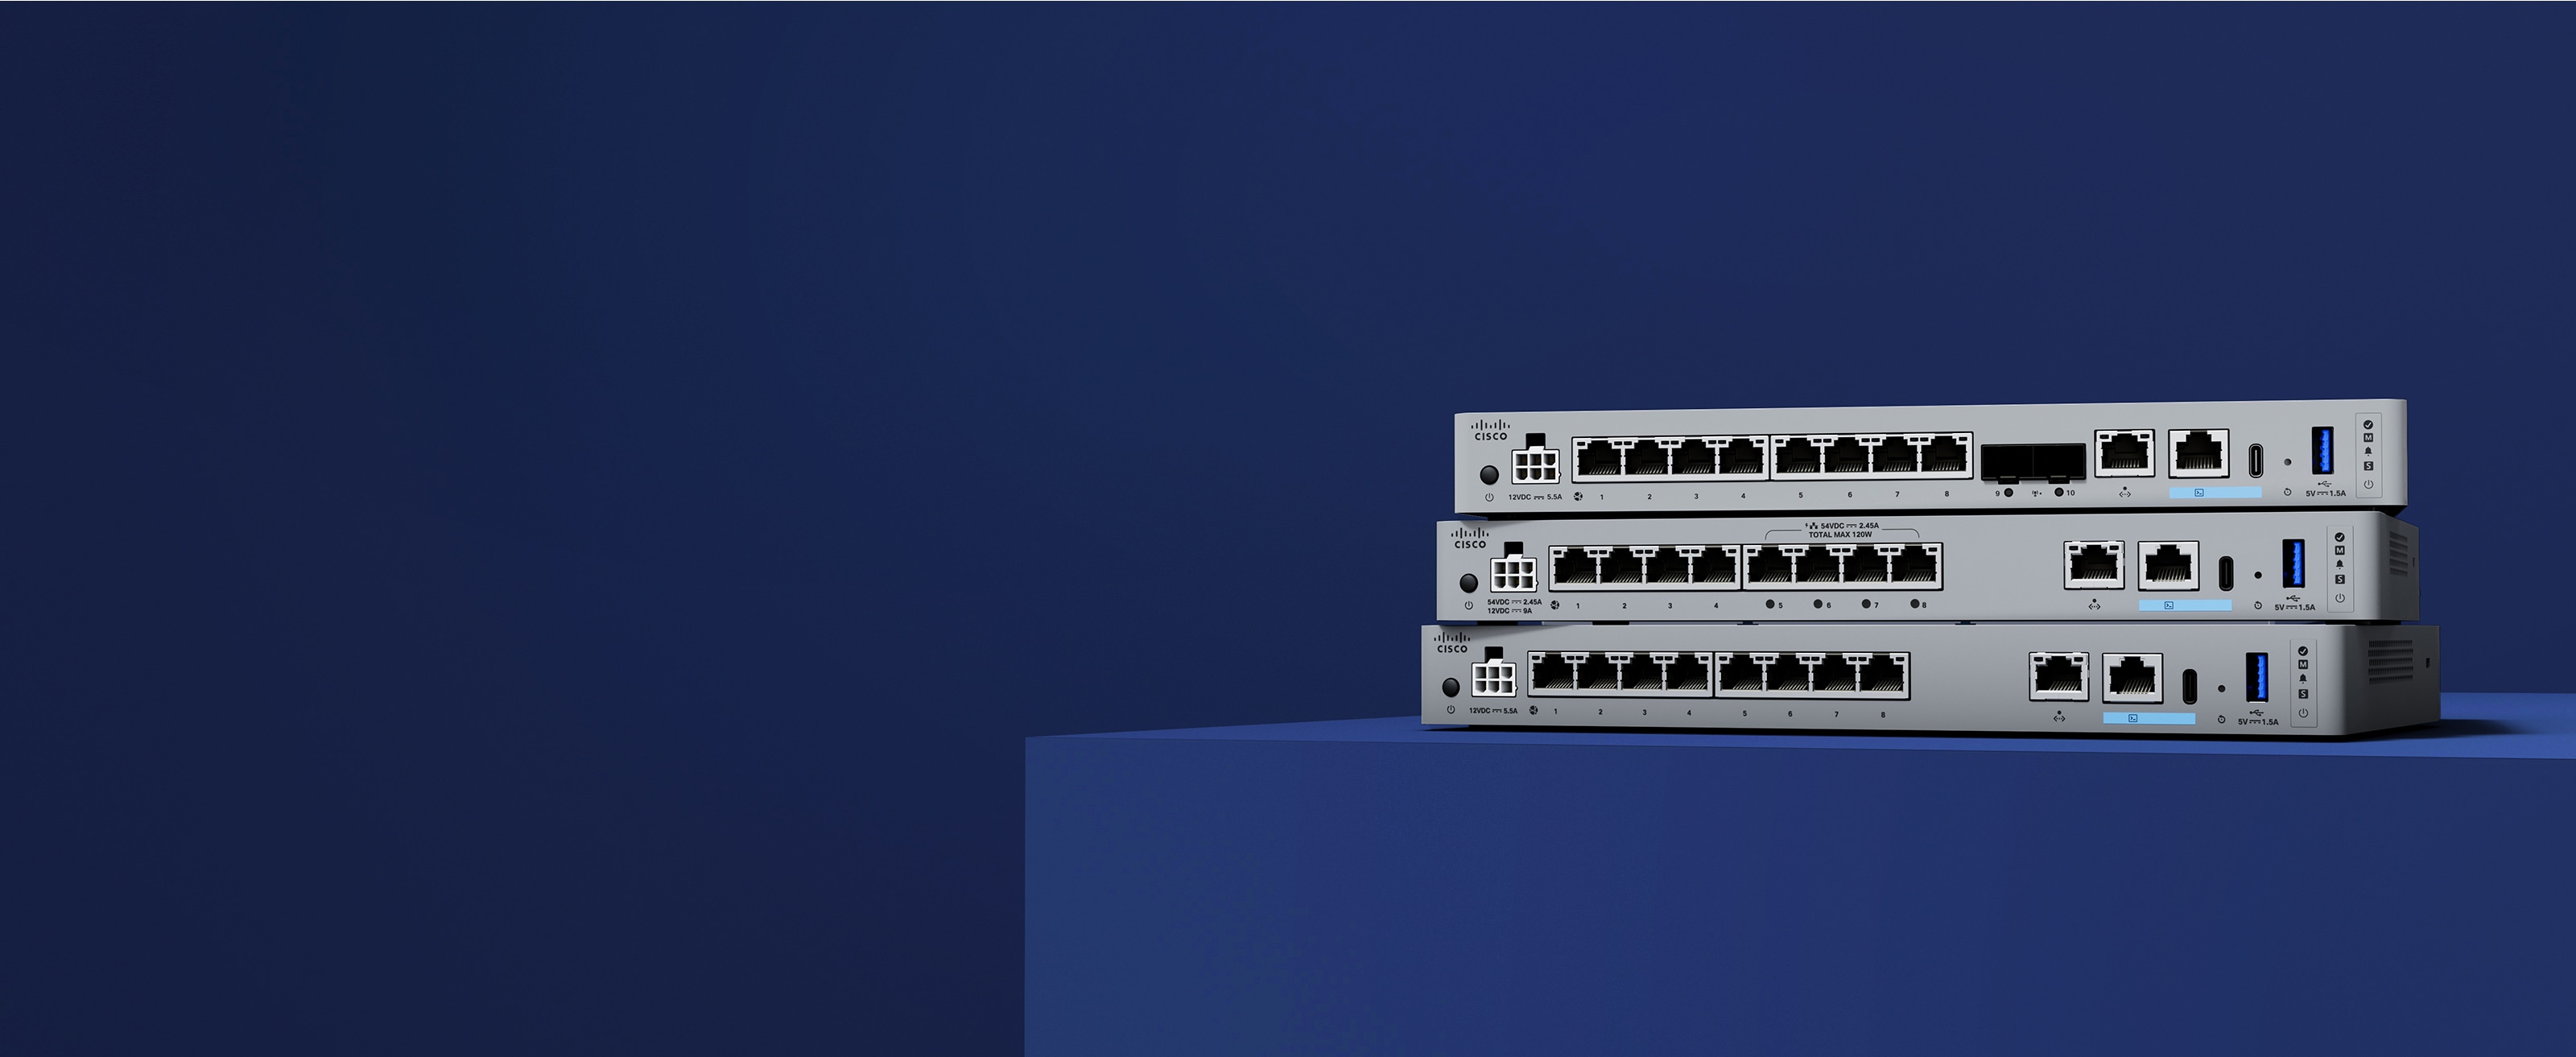 Cisco Secure Firewall 1200 Series